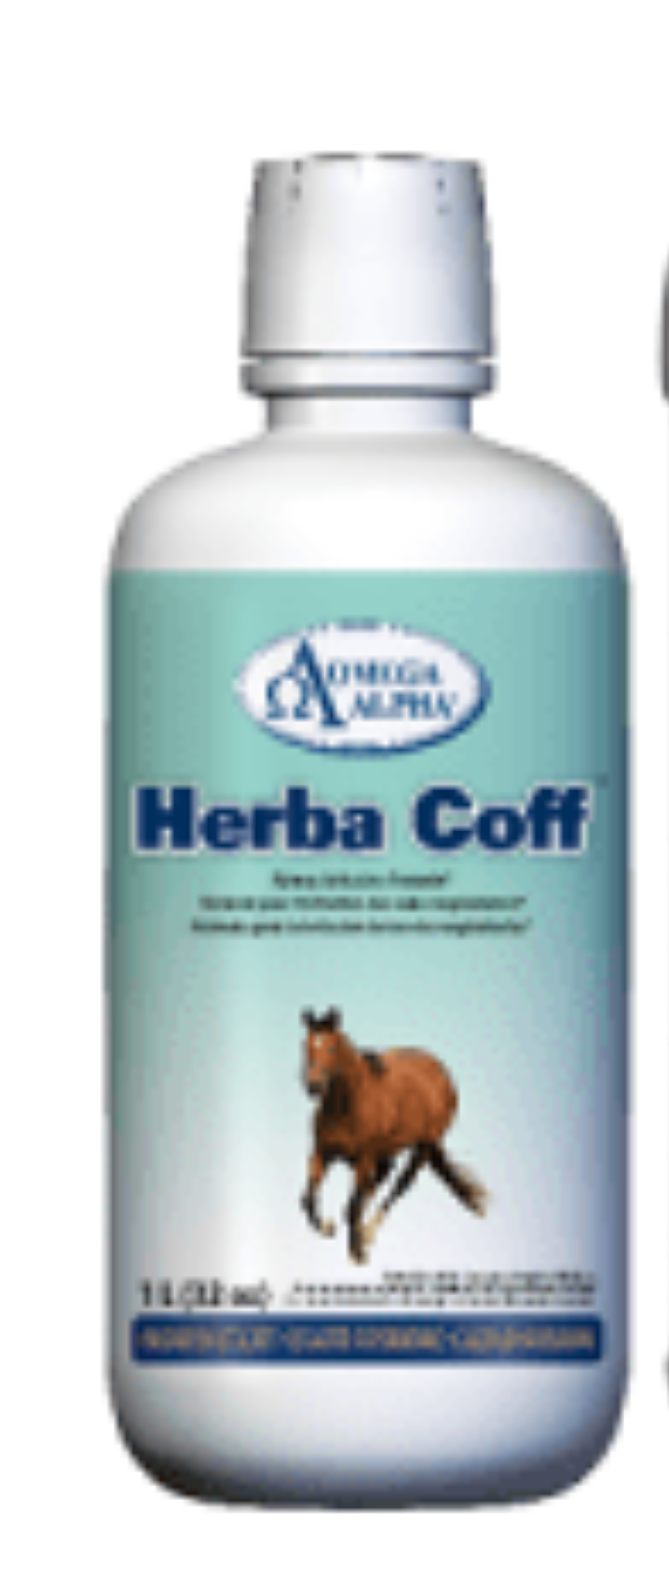 Omega Alpha Herba Coff